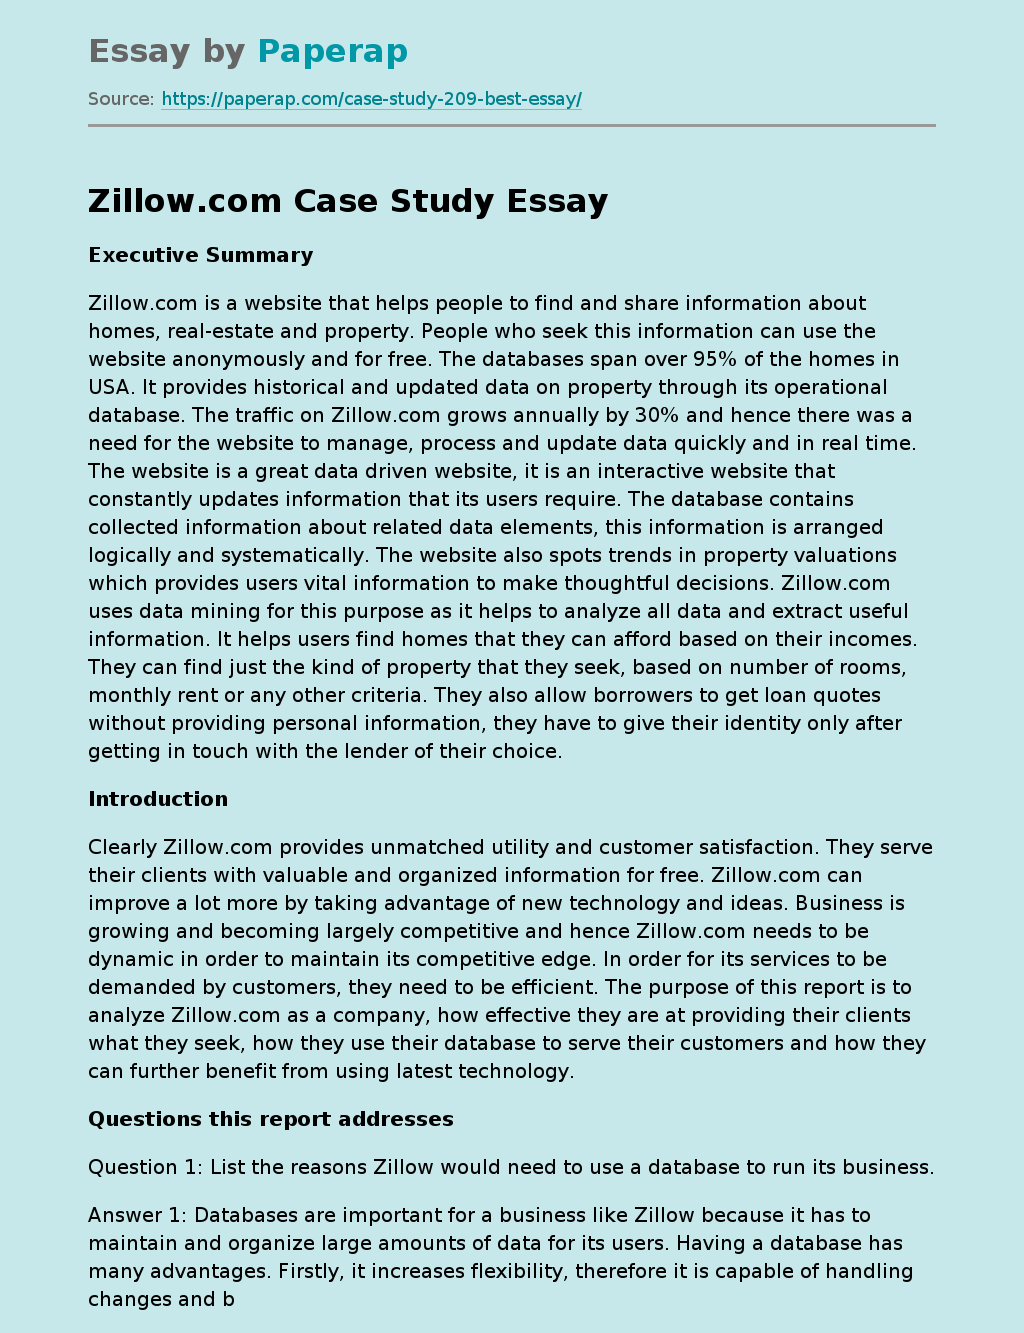 Zillow.com Case Study